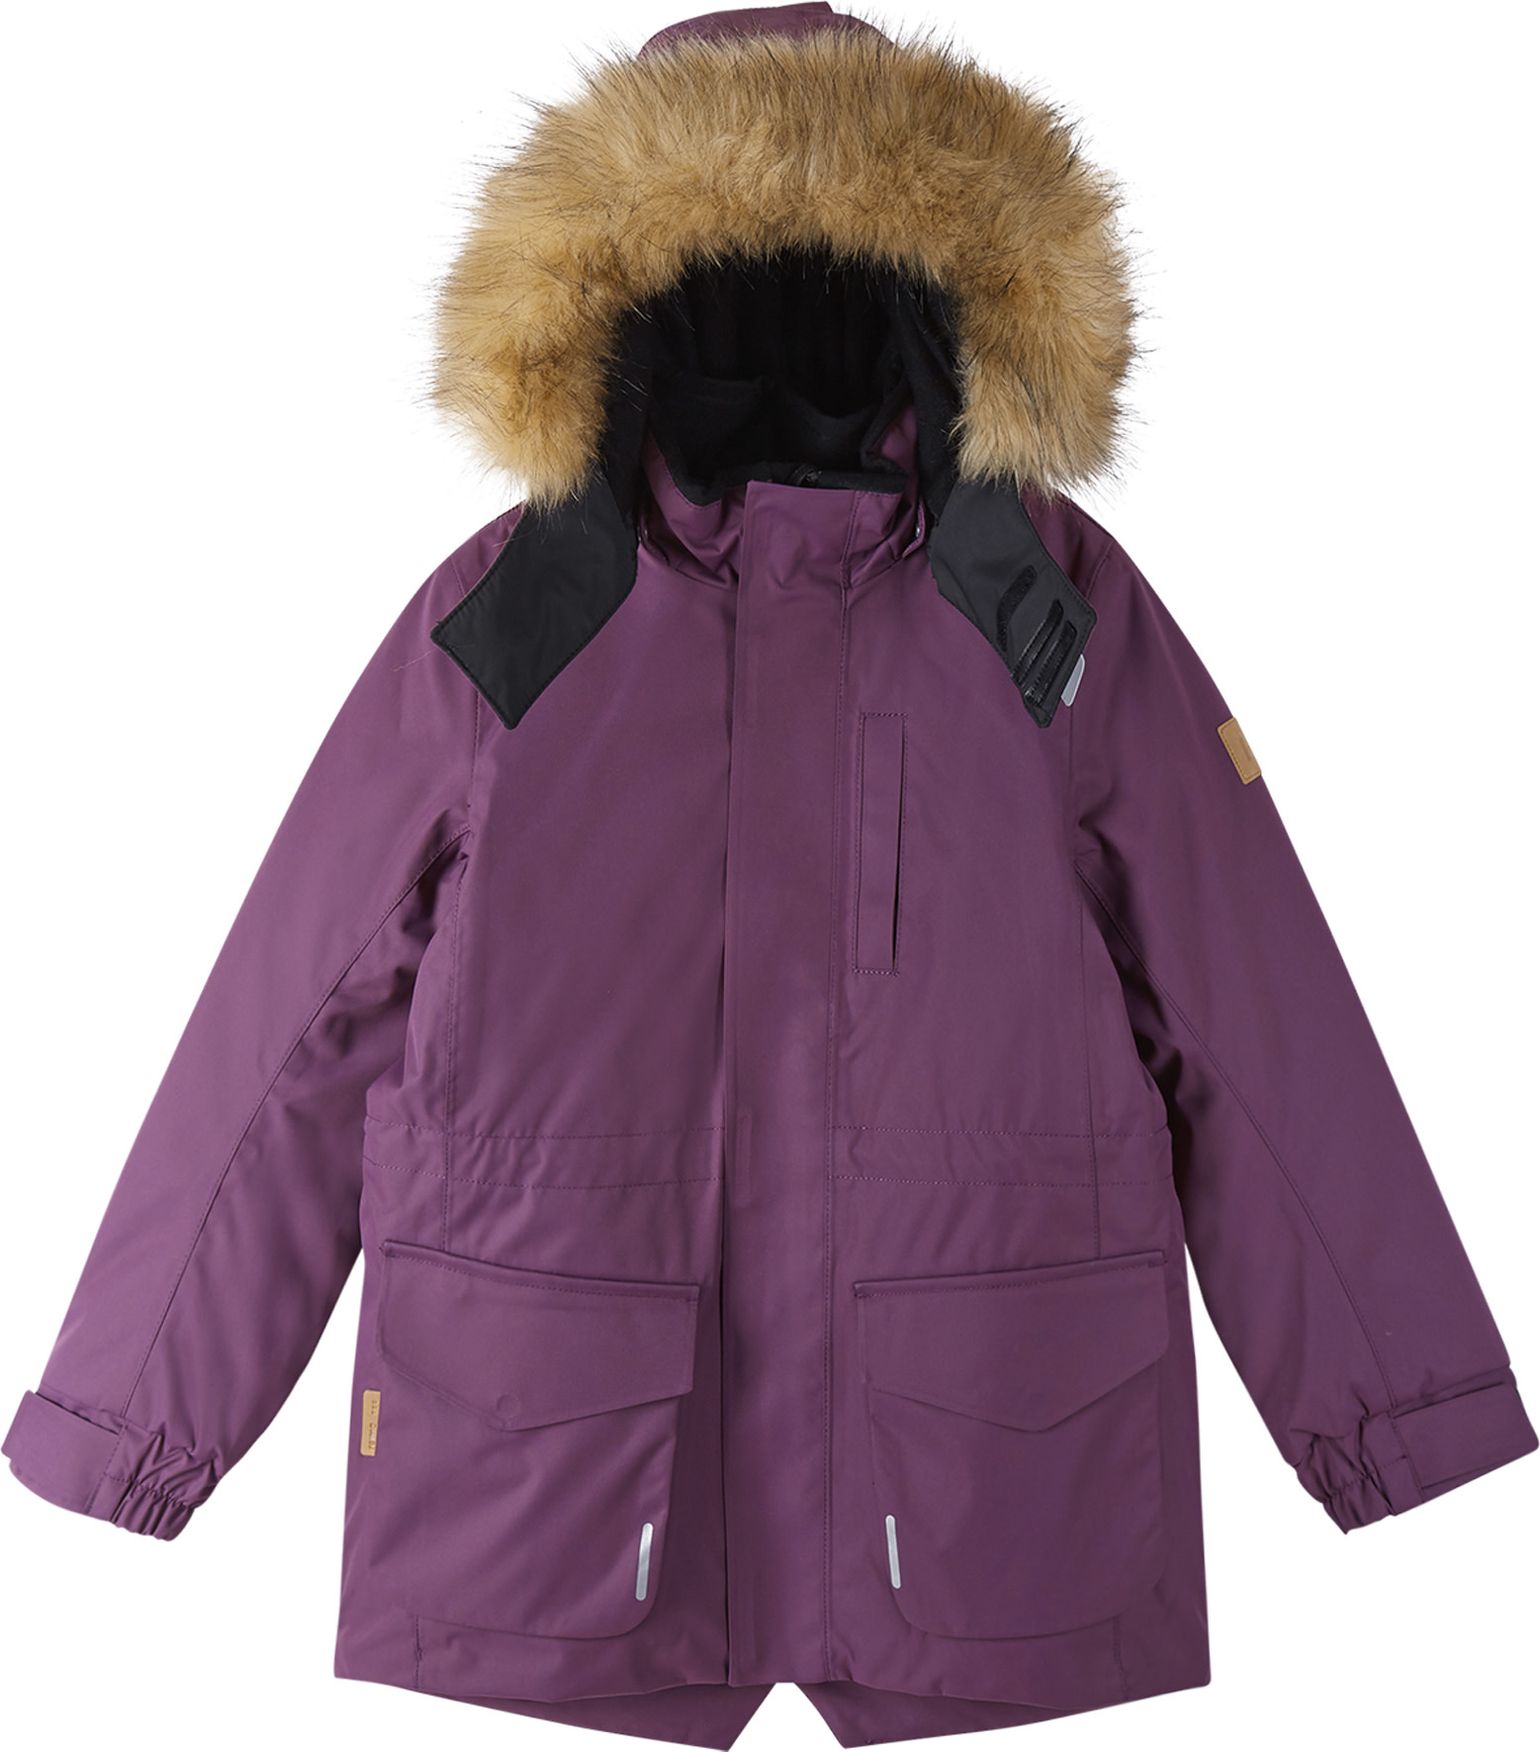 Kids' Reimatec Winter Jacket Naapuri Deep purple 4960